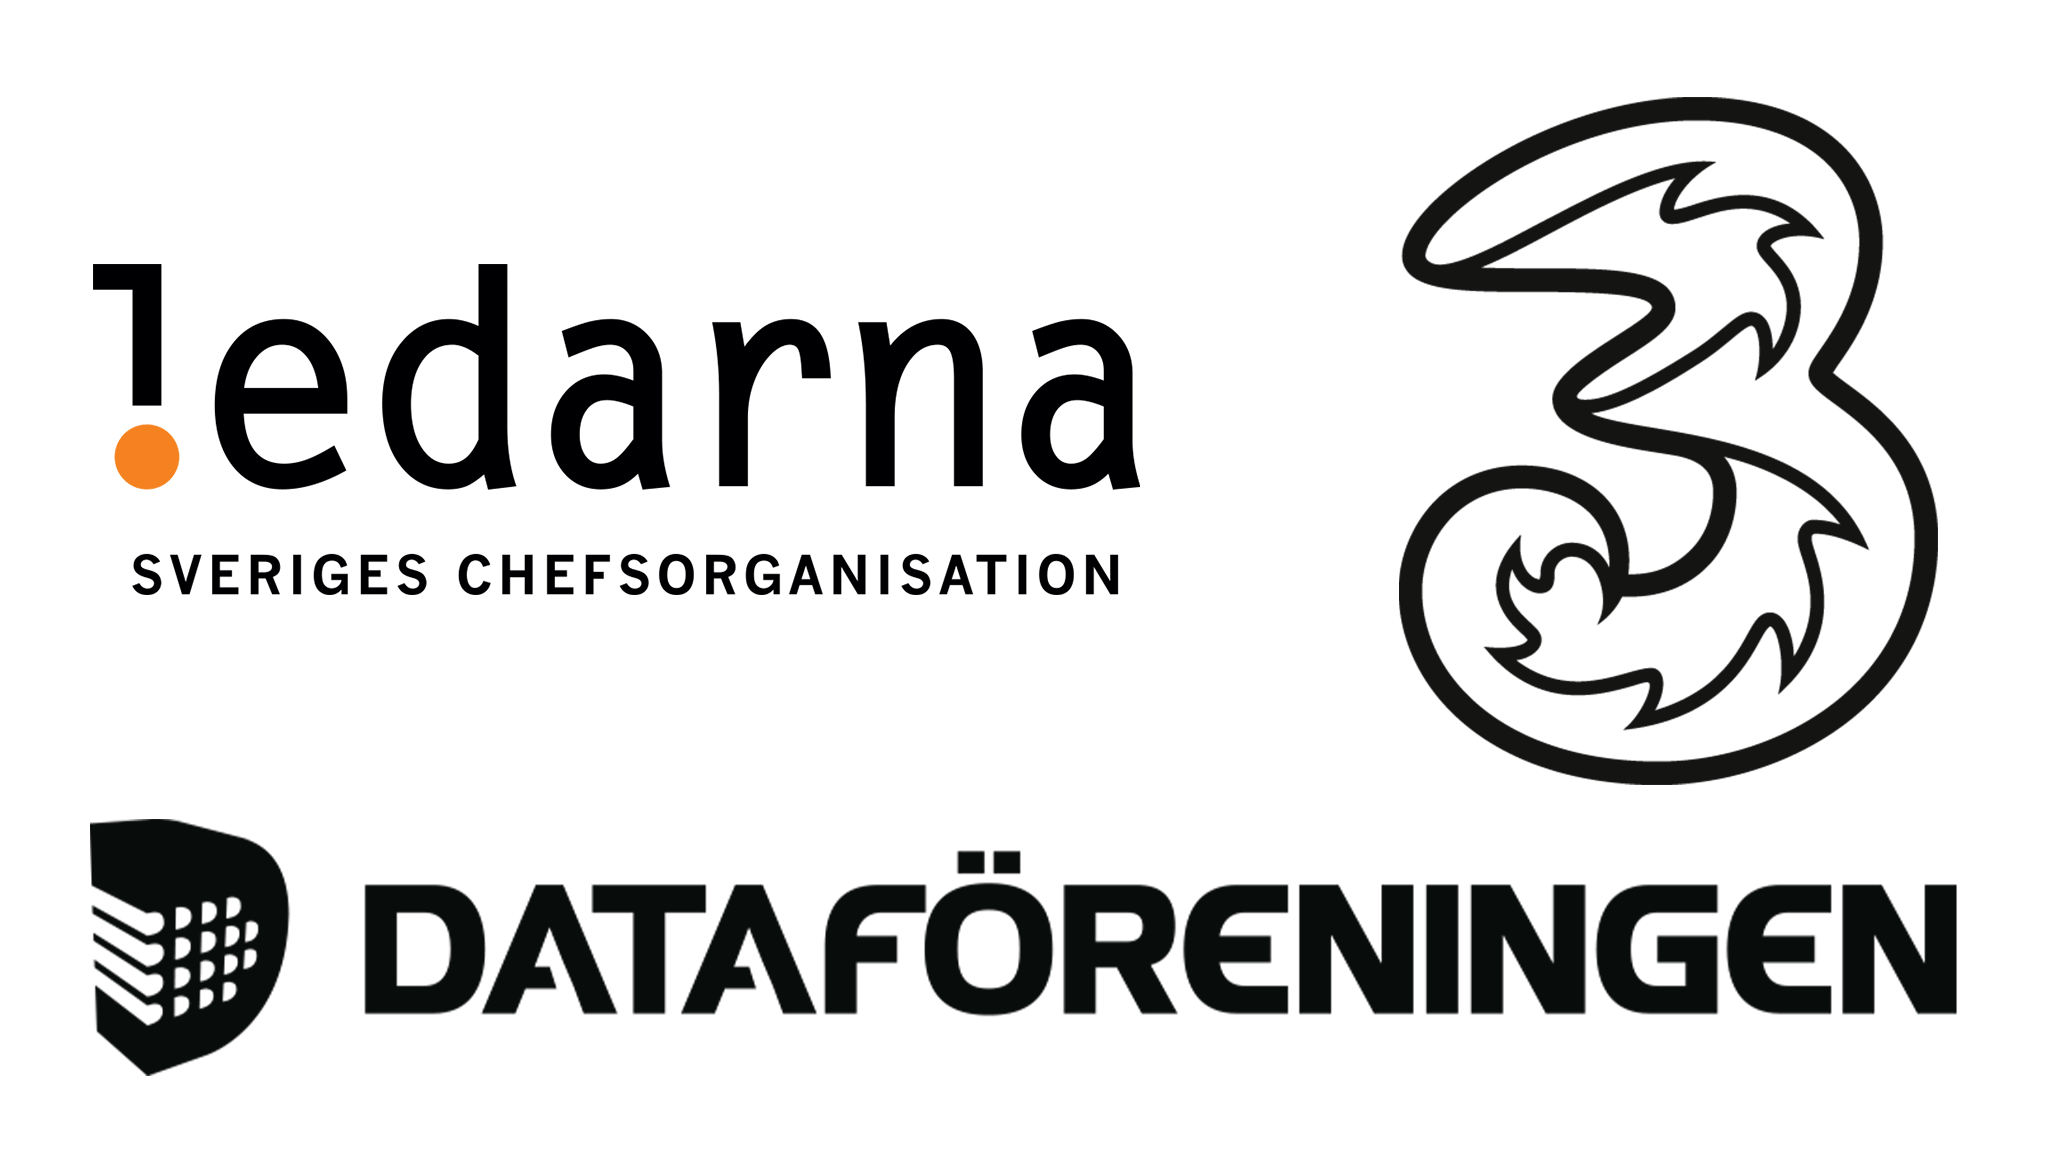 tre-ledarna-dataforeningen-loggor.png